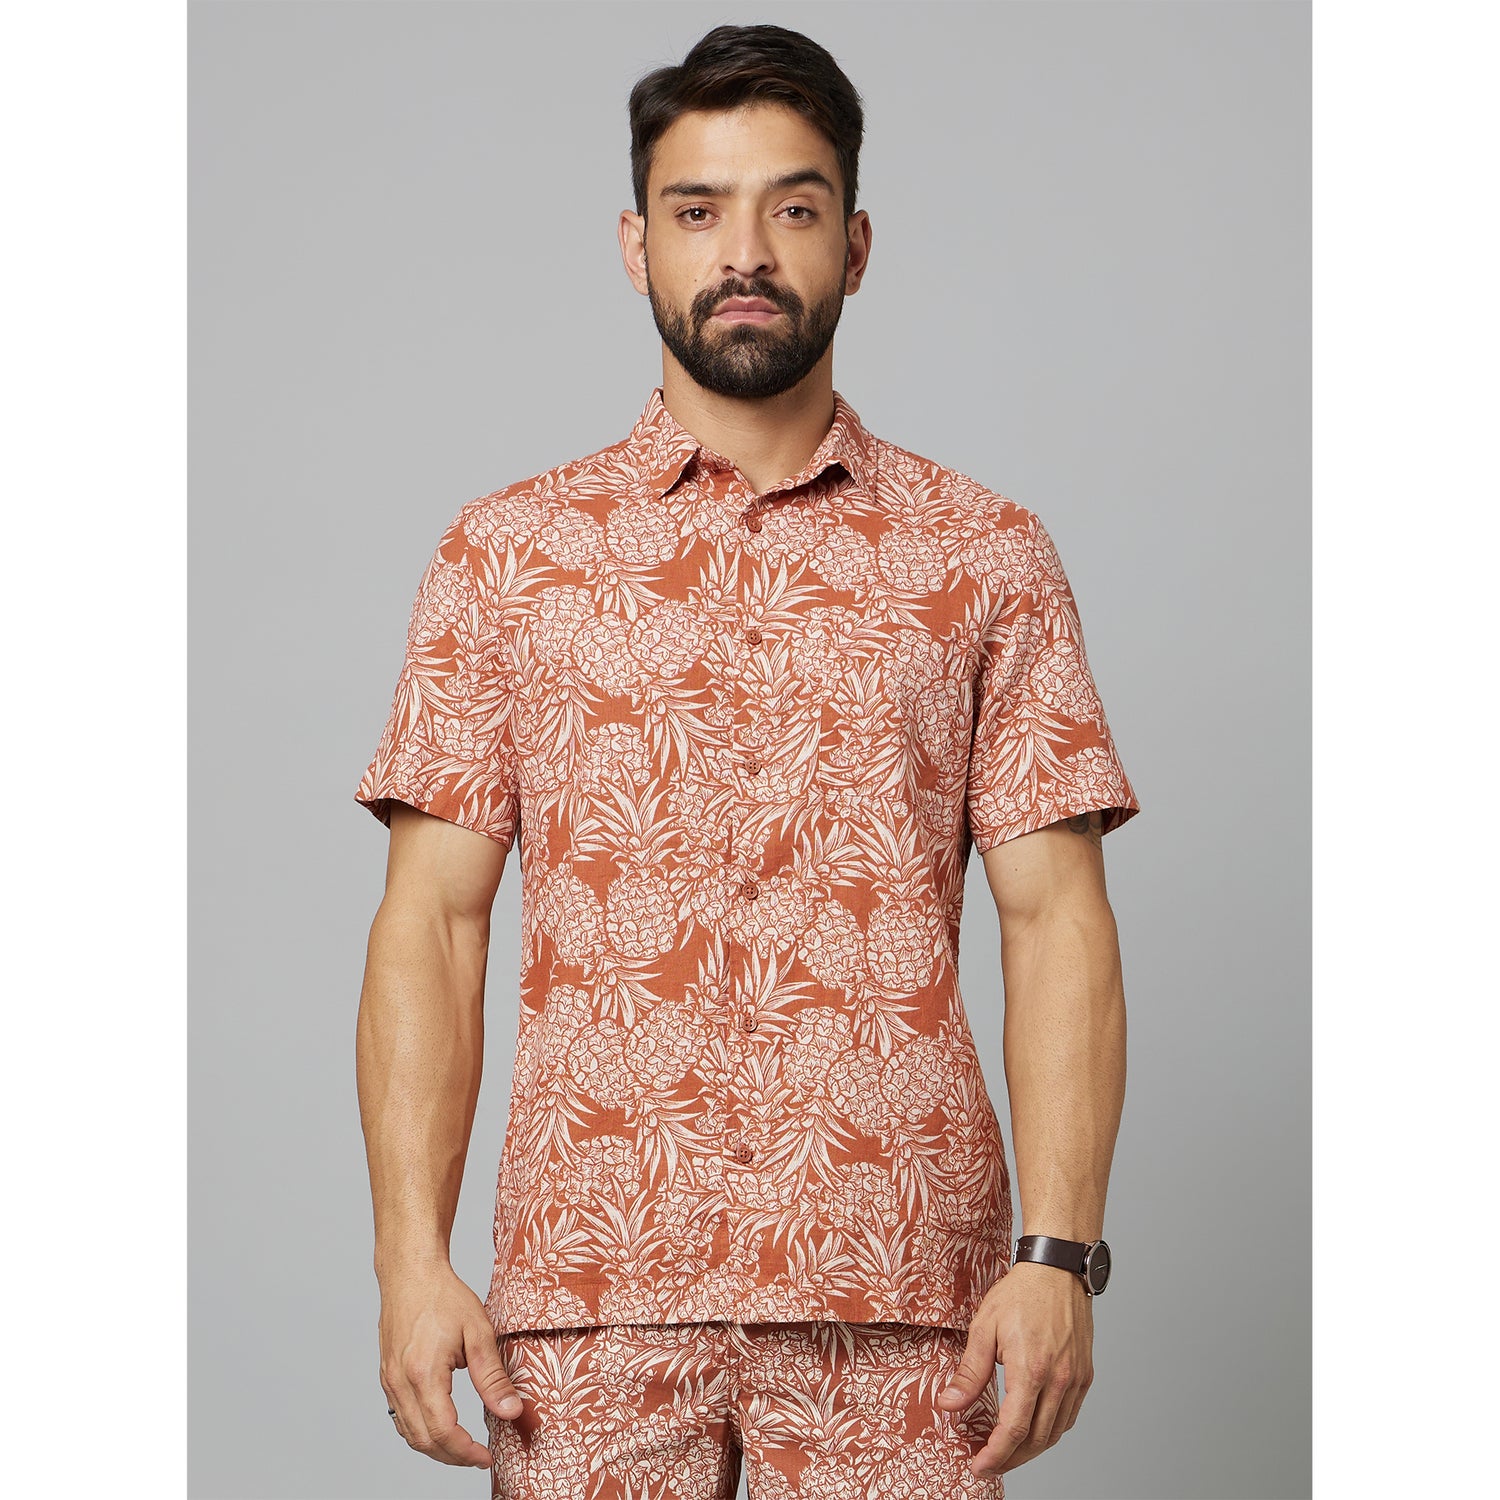 Rust Classic Tropical Printed Spread Collar Casual Cotton Shirt (DAOVERA)